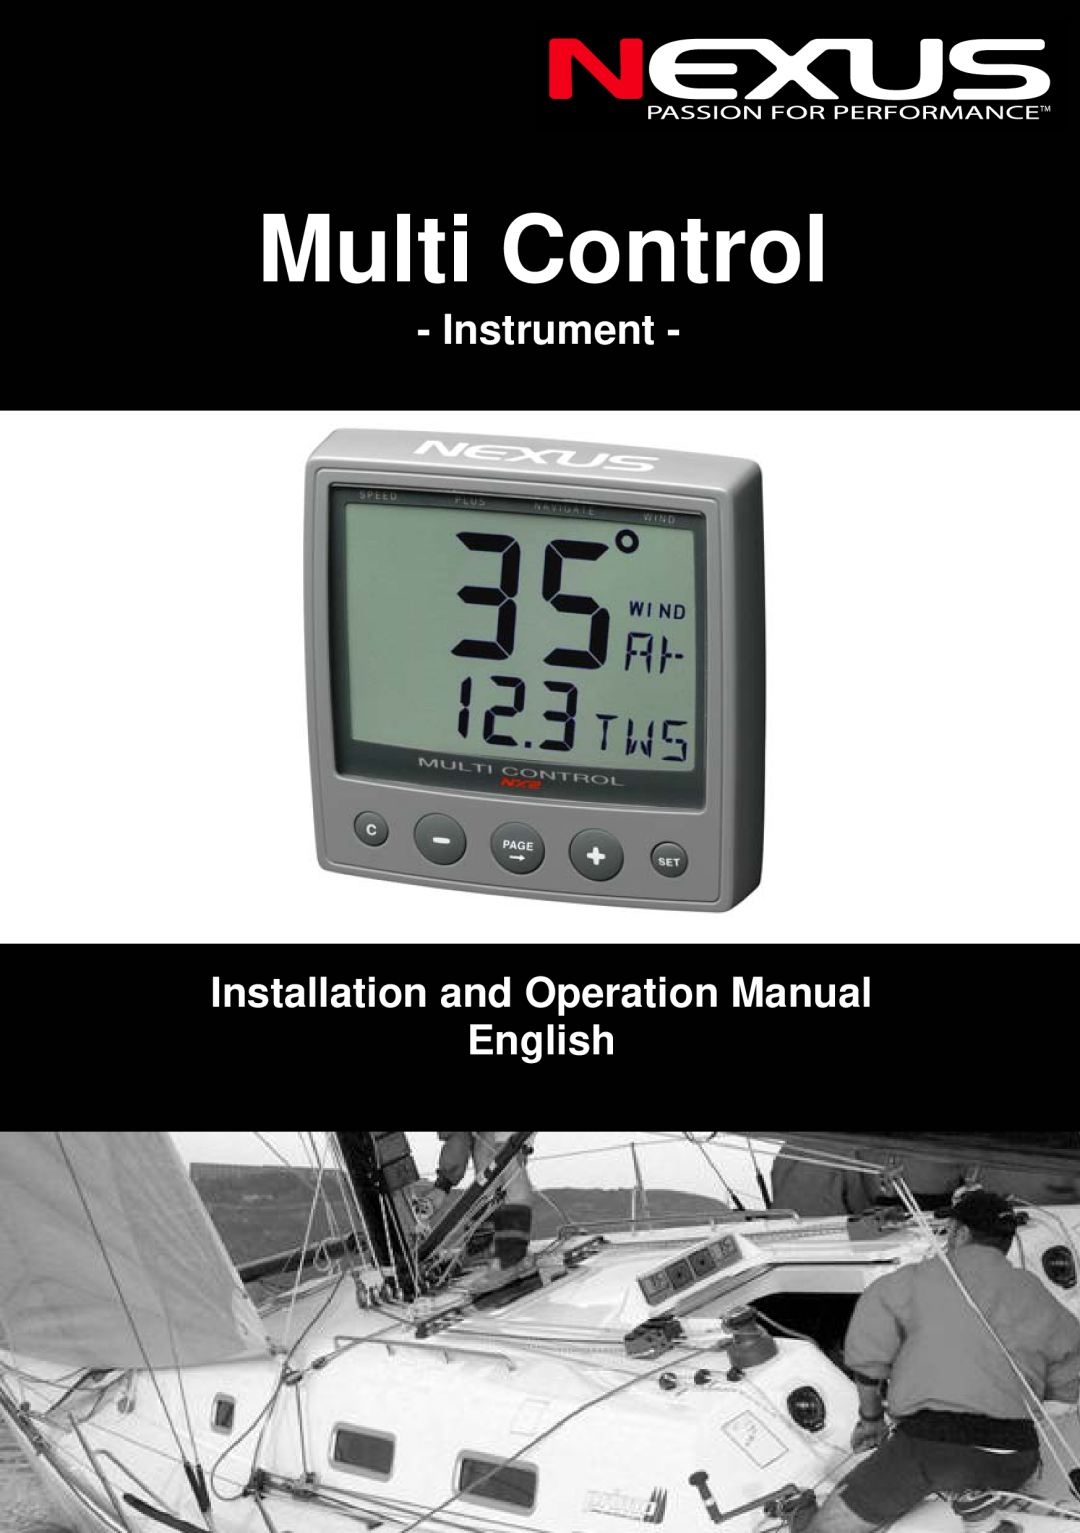 Nexus 21 Multi Control operation manual English 